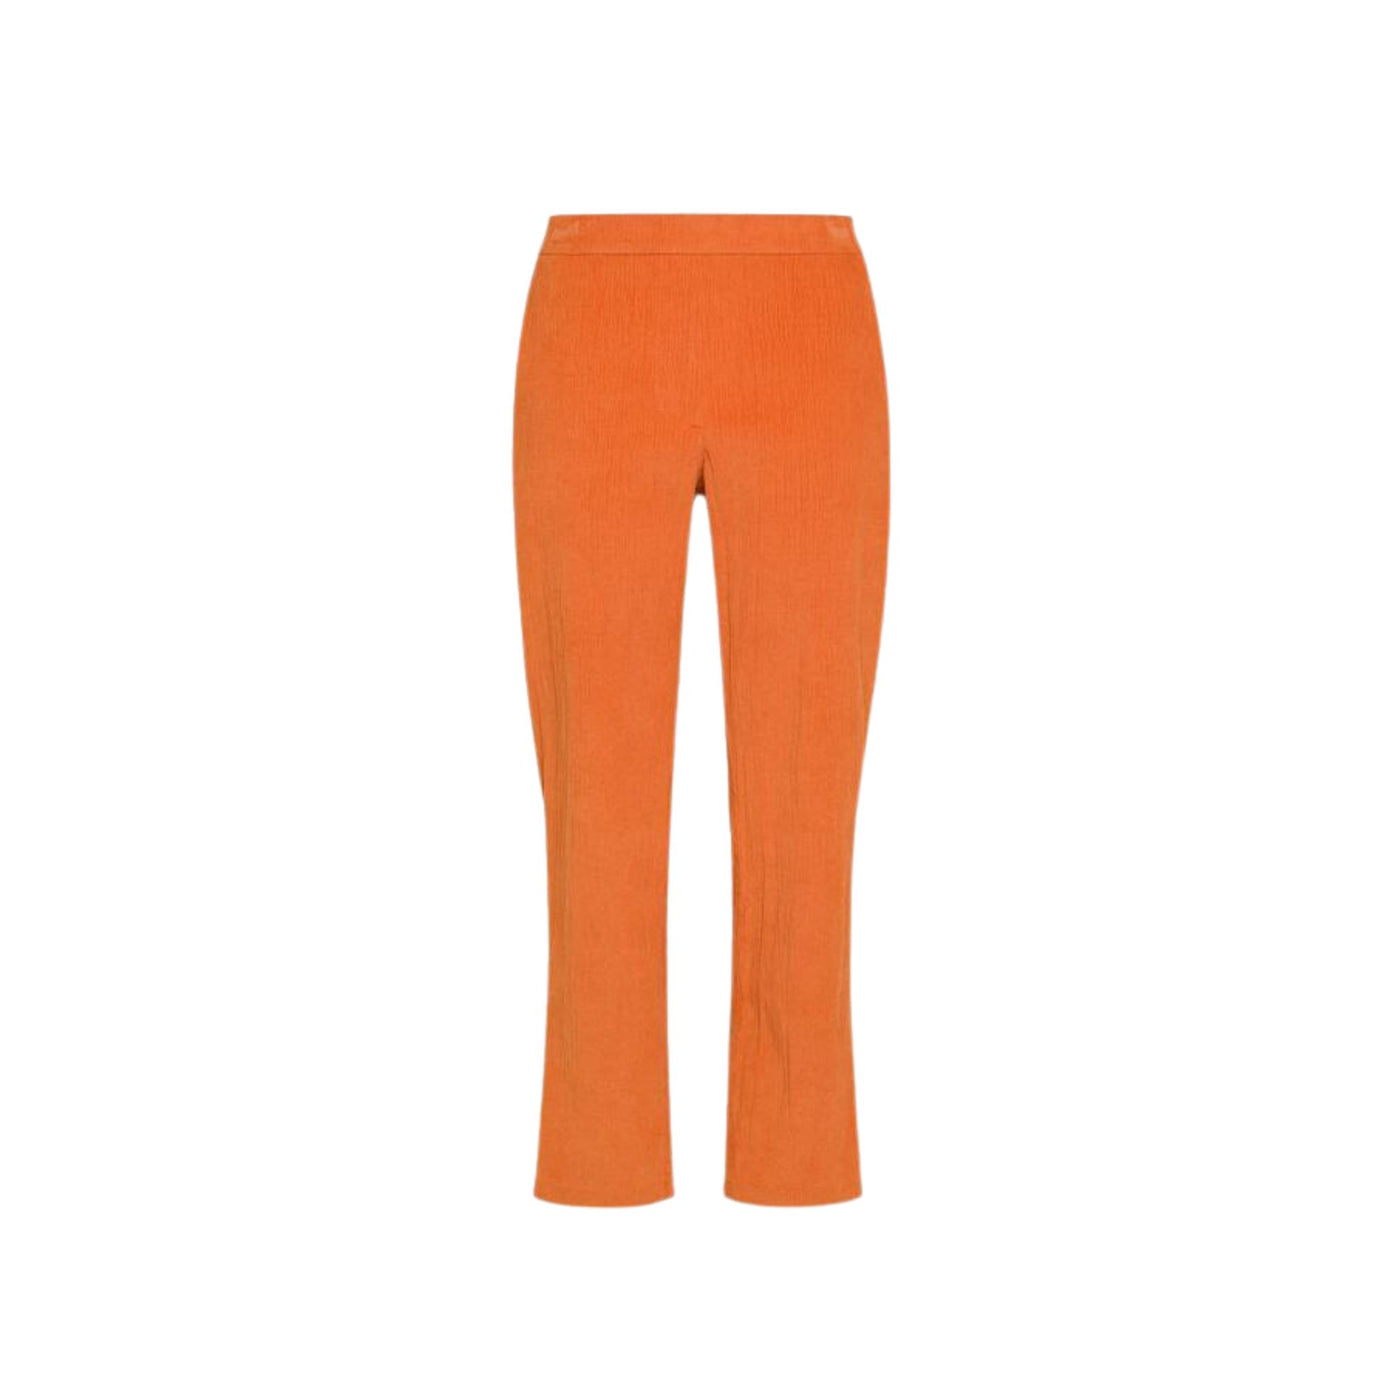 Pantalone da donna arancio vista frontale